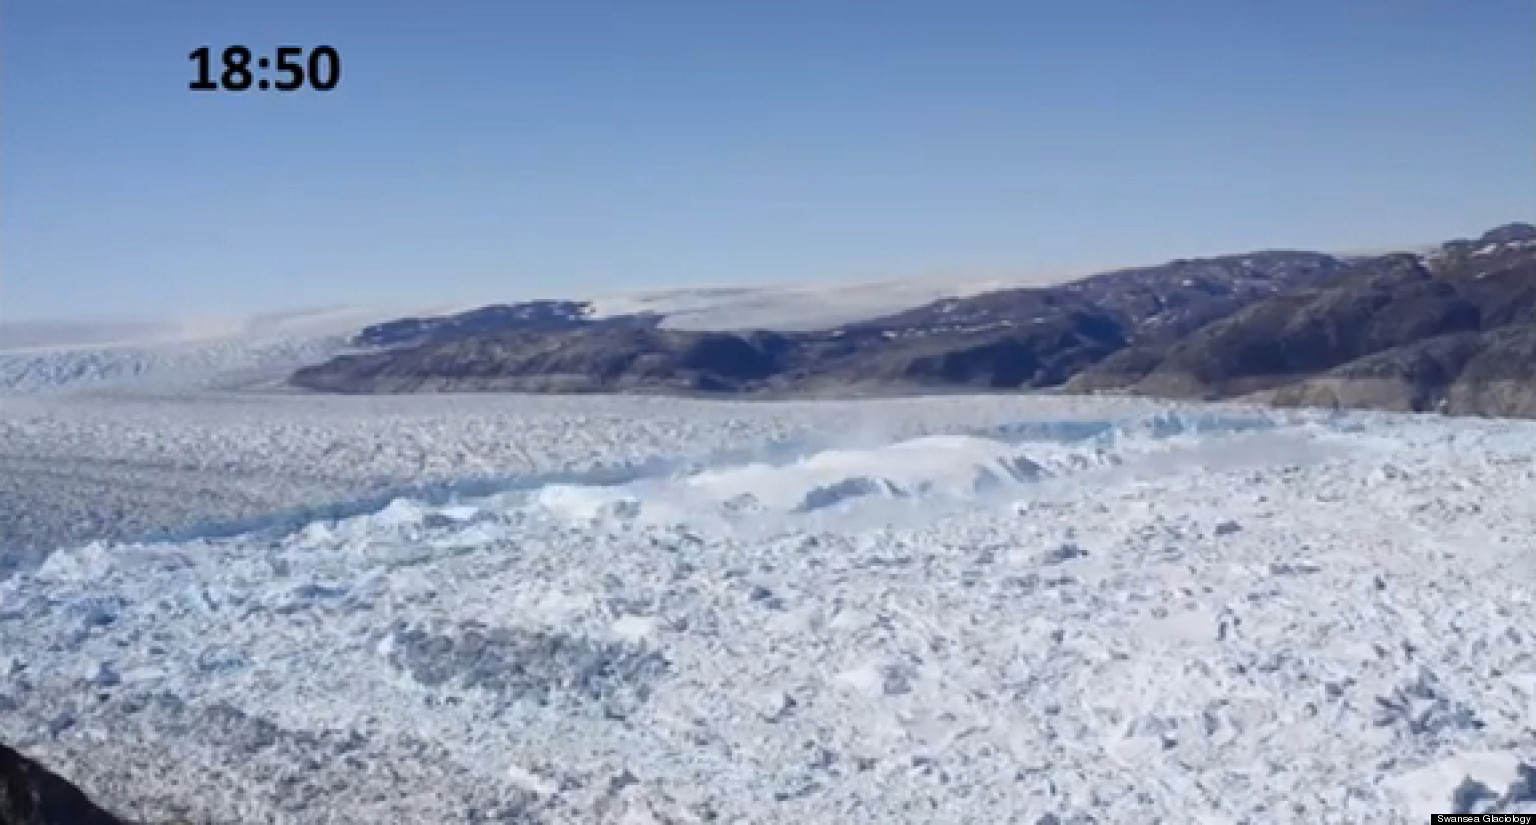 Helheim Glacier Calving Video Shows Ice Breaking Off Into Sea | HuffPost1536 x 825